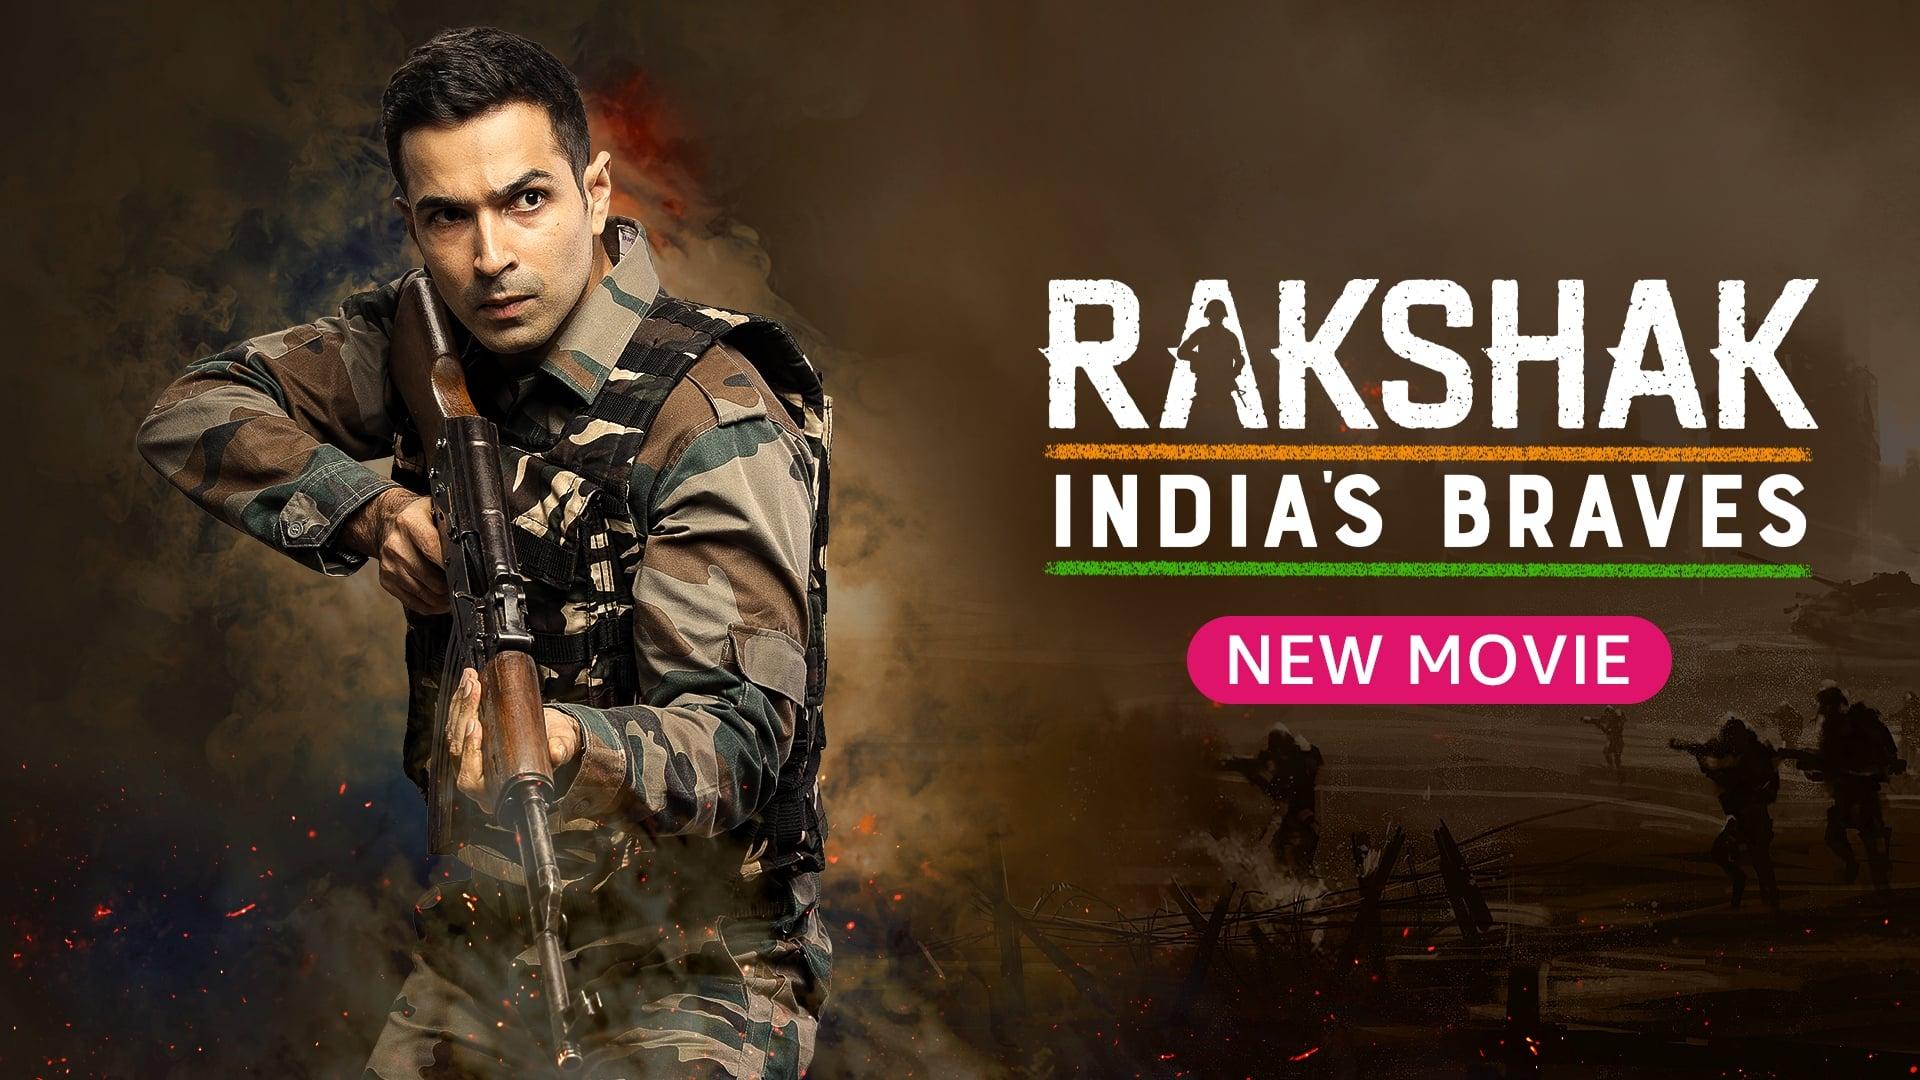 Rakshak - India's Braves backdrop